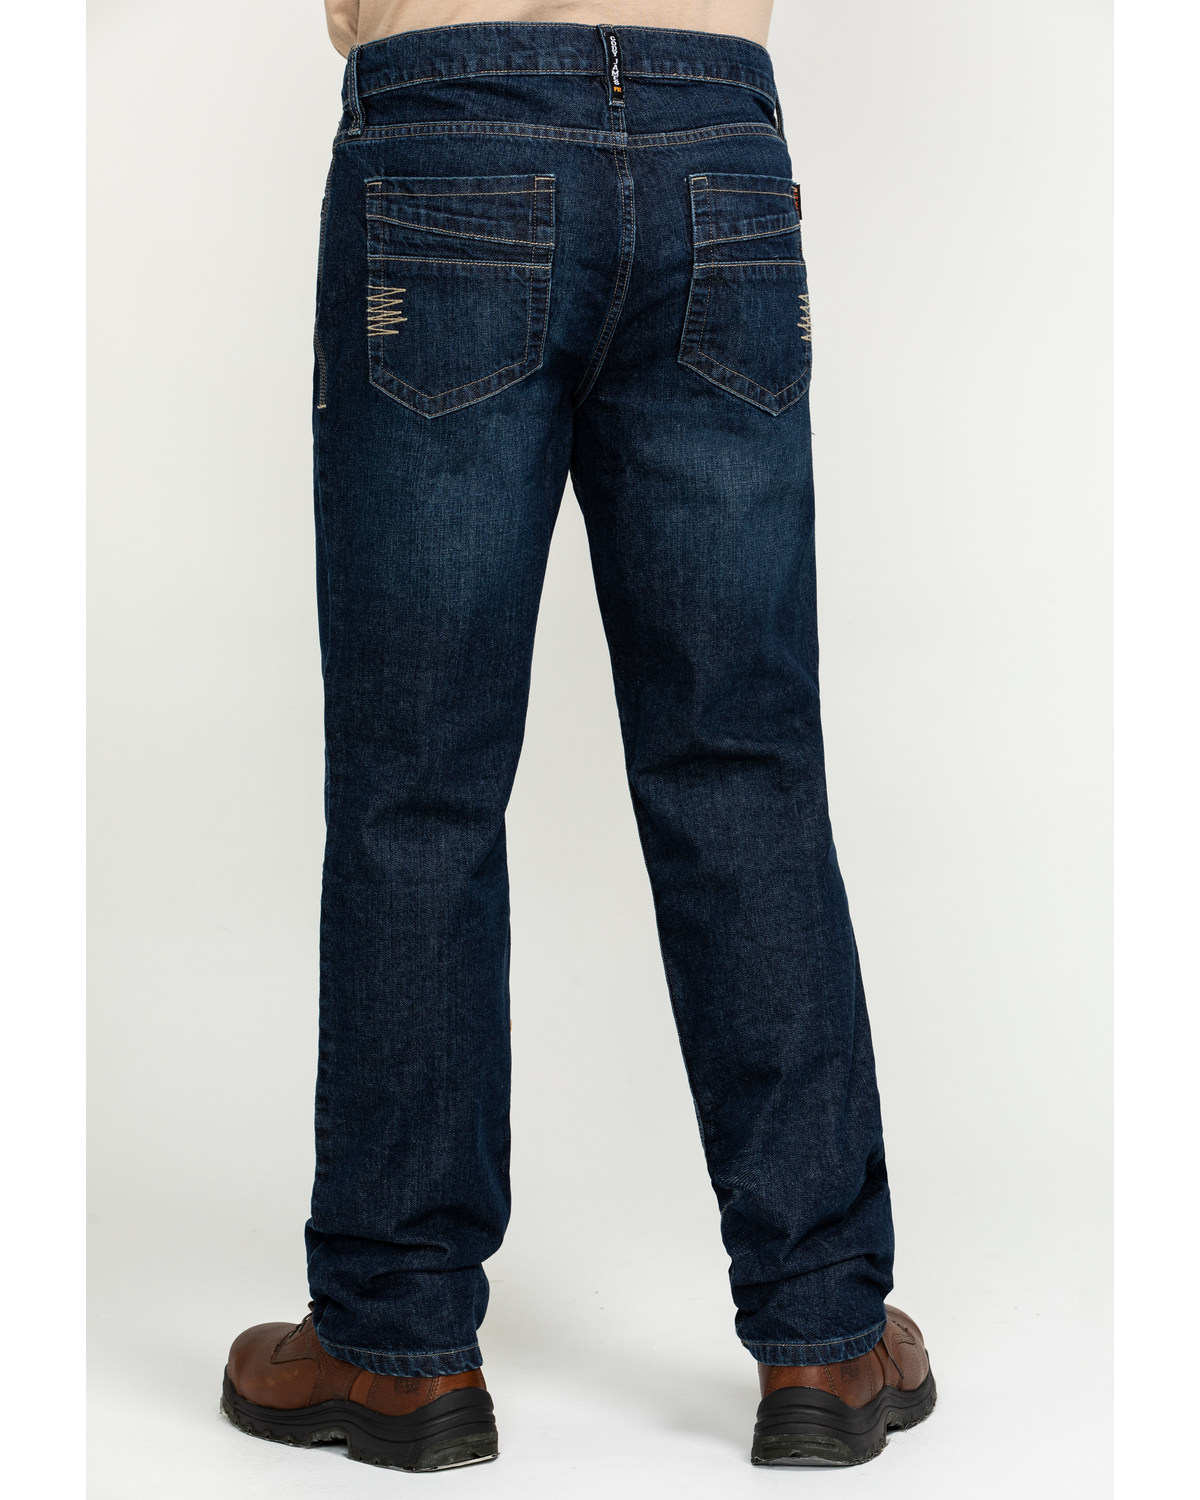 Cody James Men's FR Millikin Slim Straight Work Jeans - Big